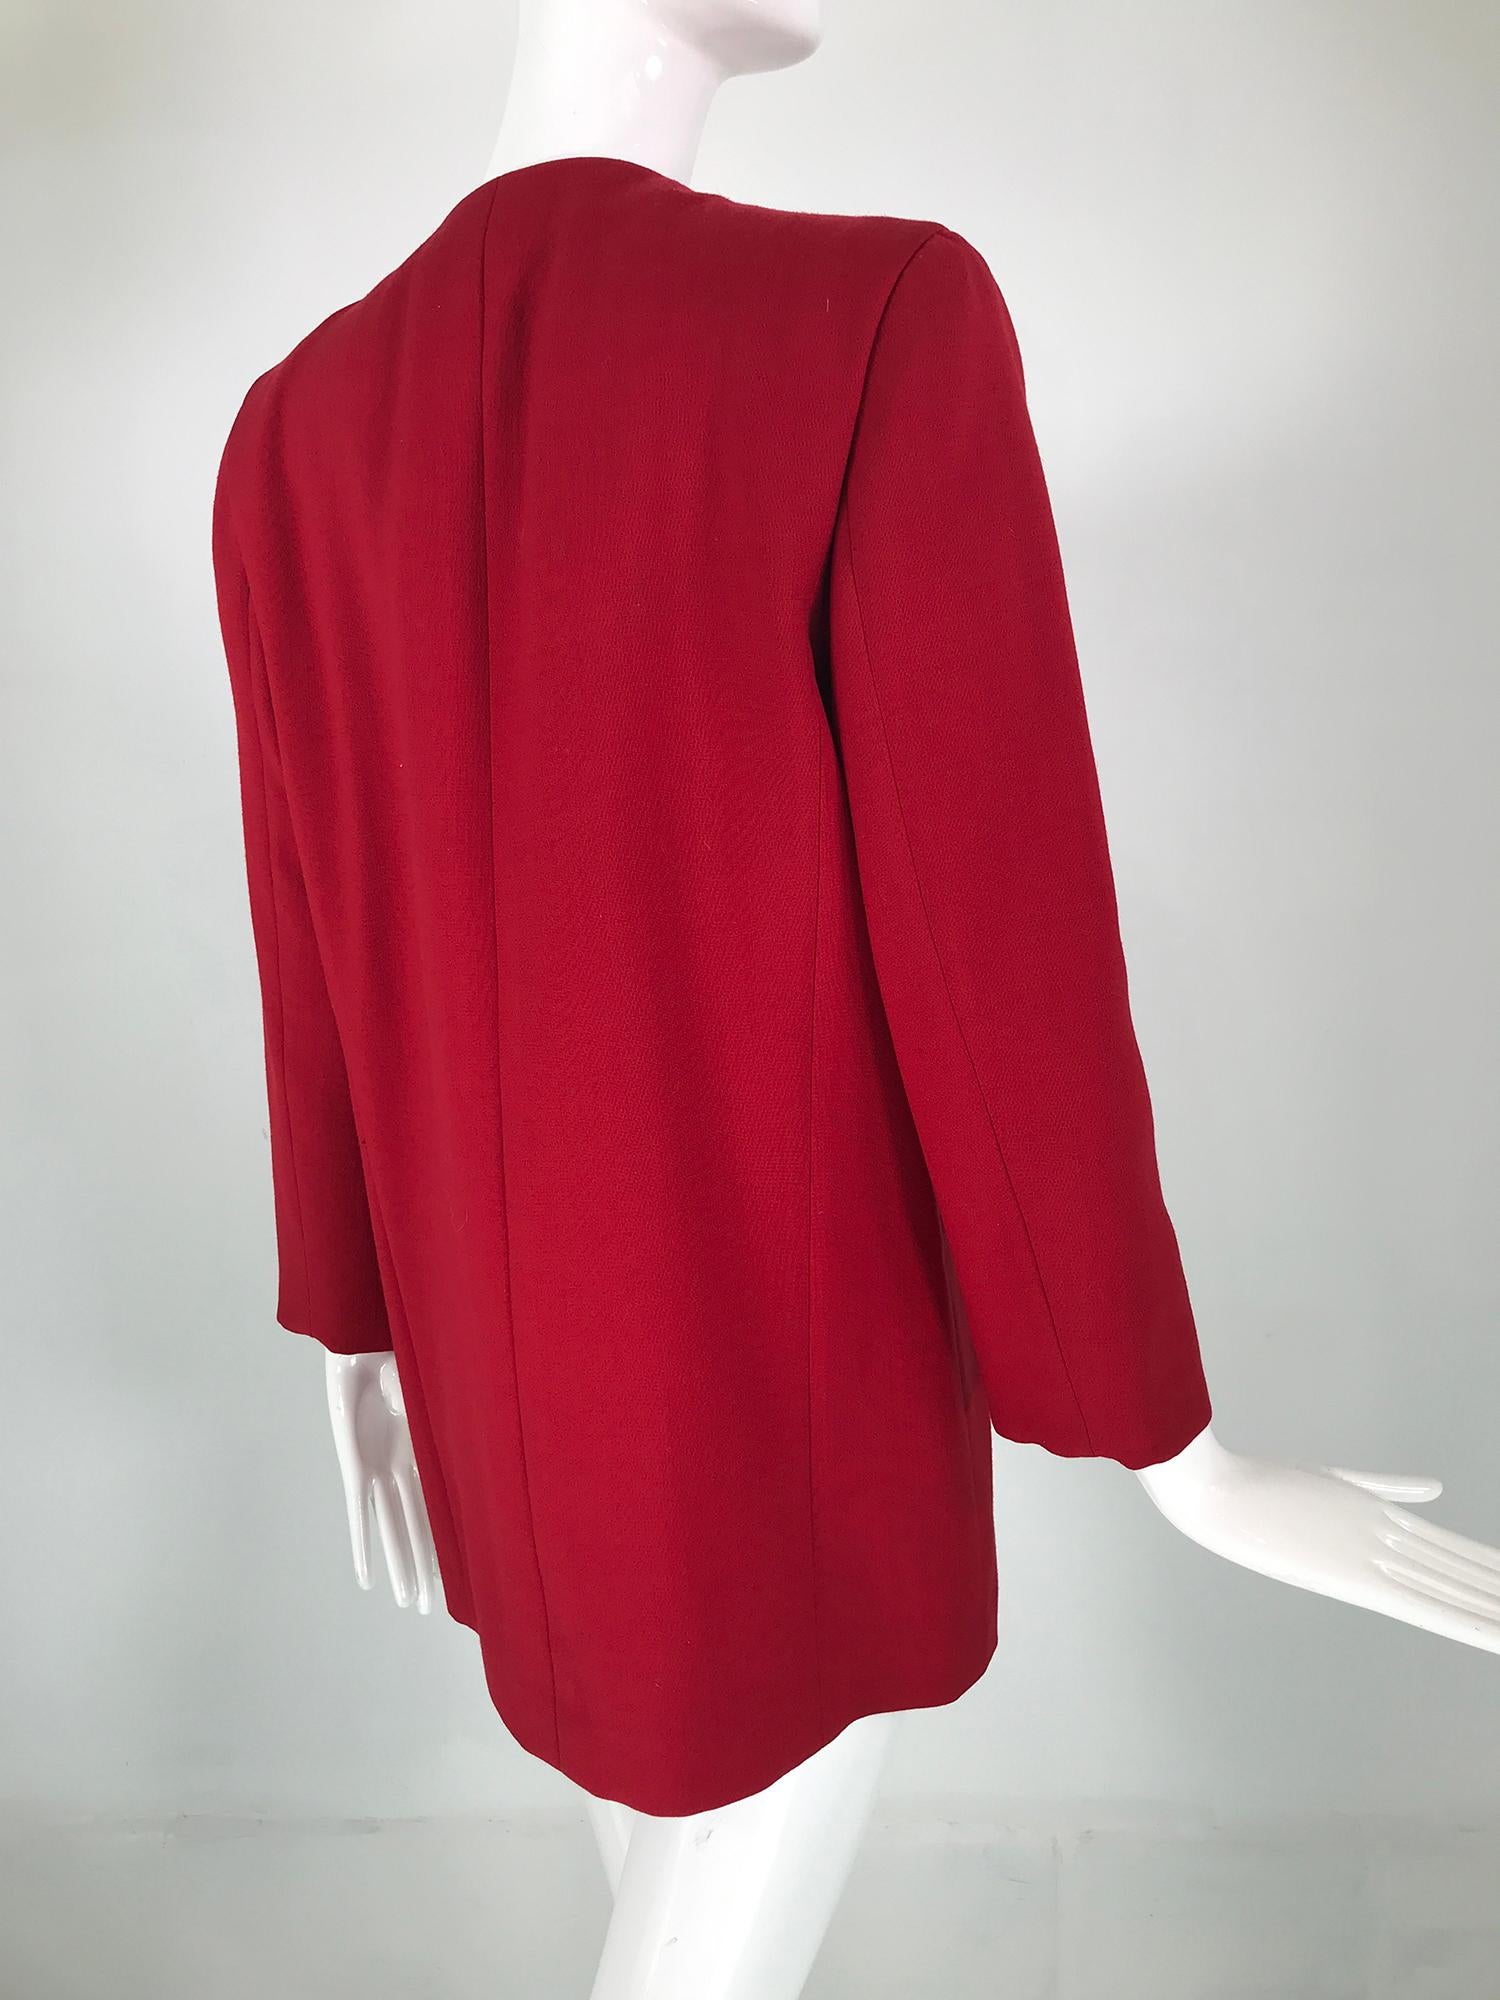 Boutique Pierre Cardin Paris Red Wool Space Age Jacket 1960s Rare Label 1